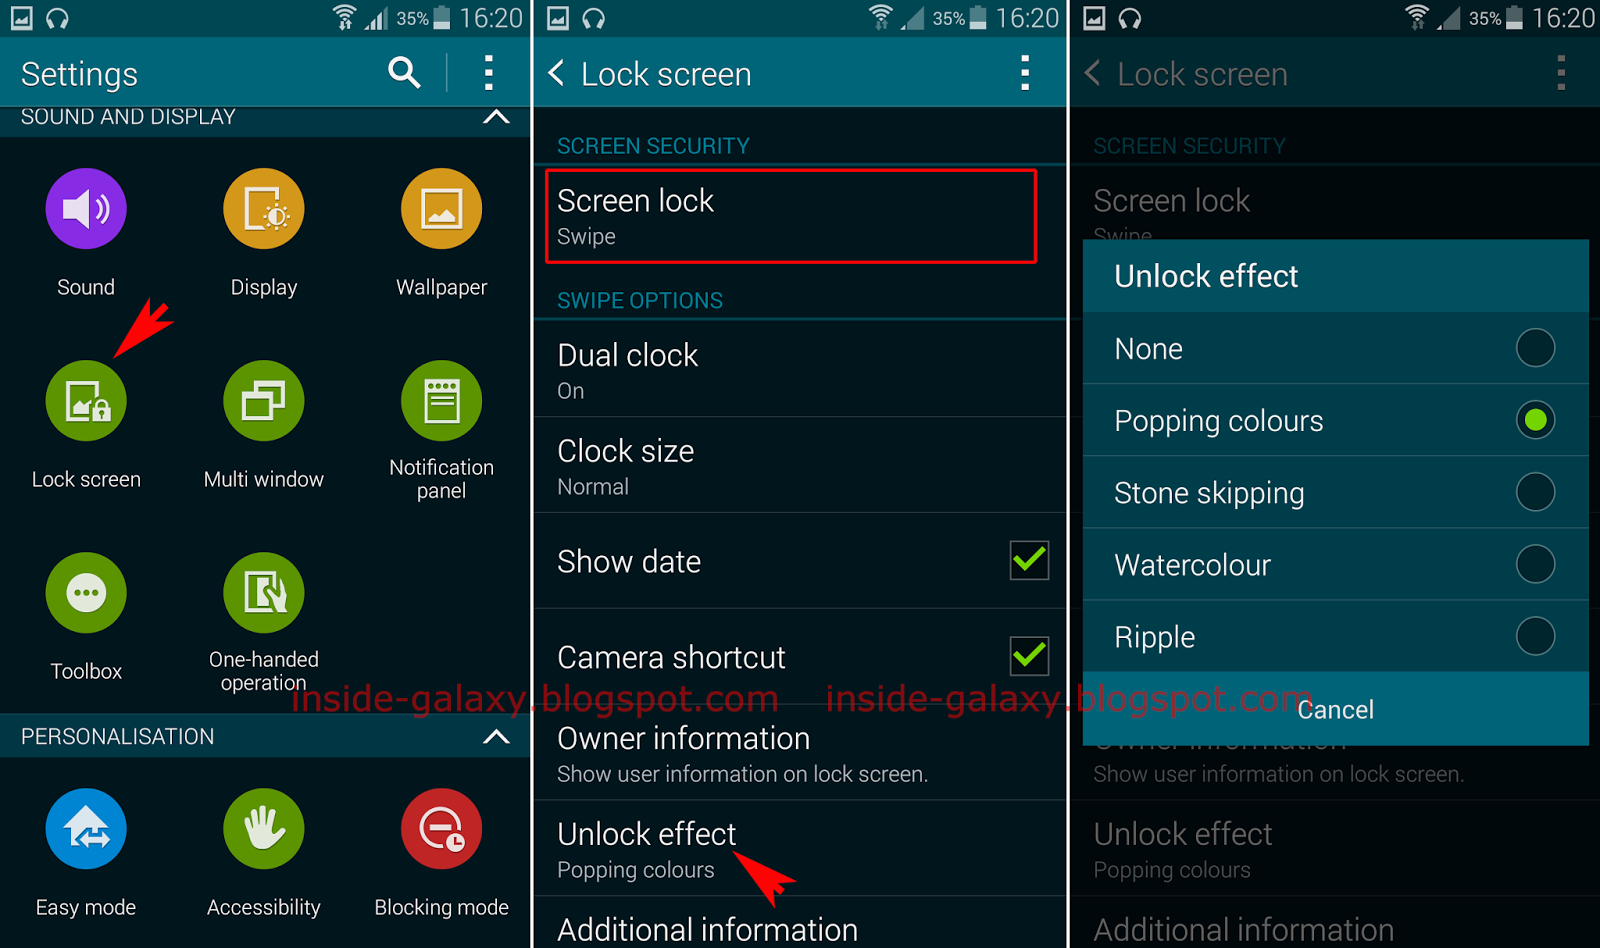 Inside Galaxy Samsung Galaxy S5 How to Change Lock Screen Effect in